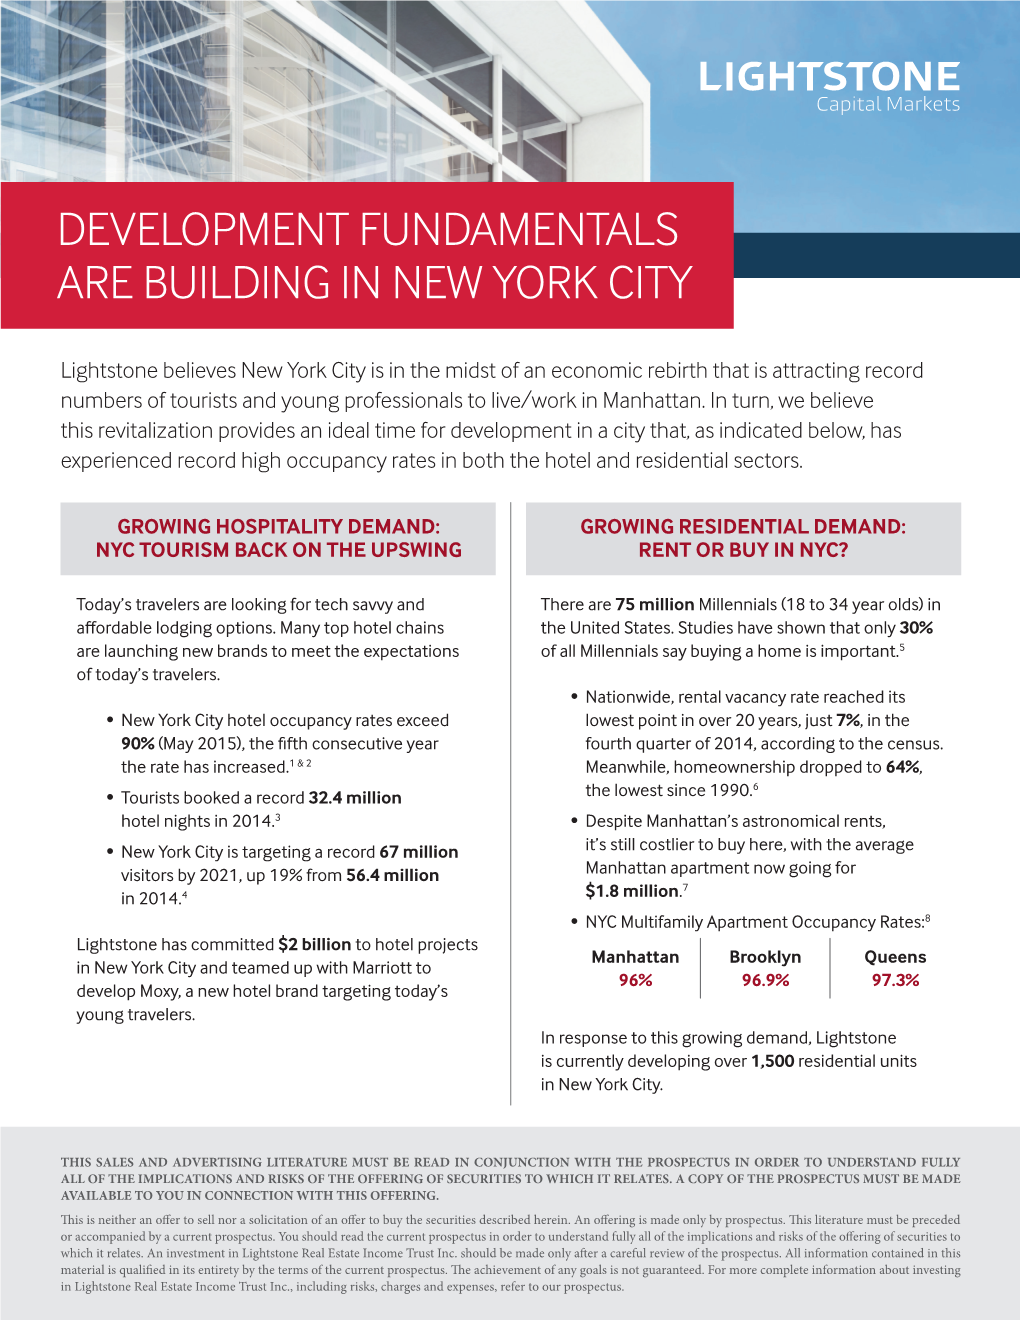 Development Fundamentals Are Building in New York City